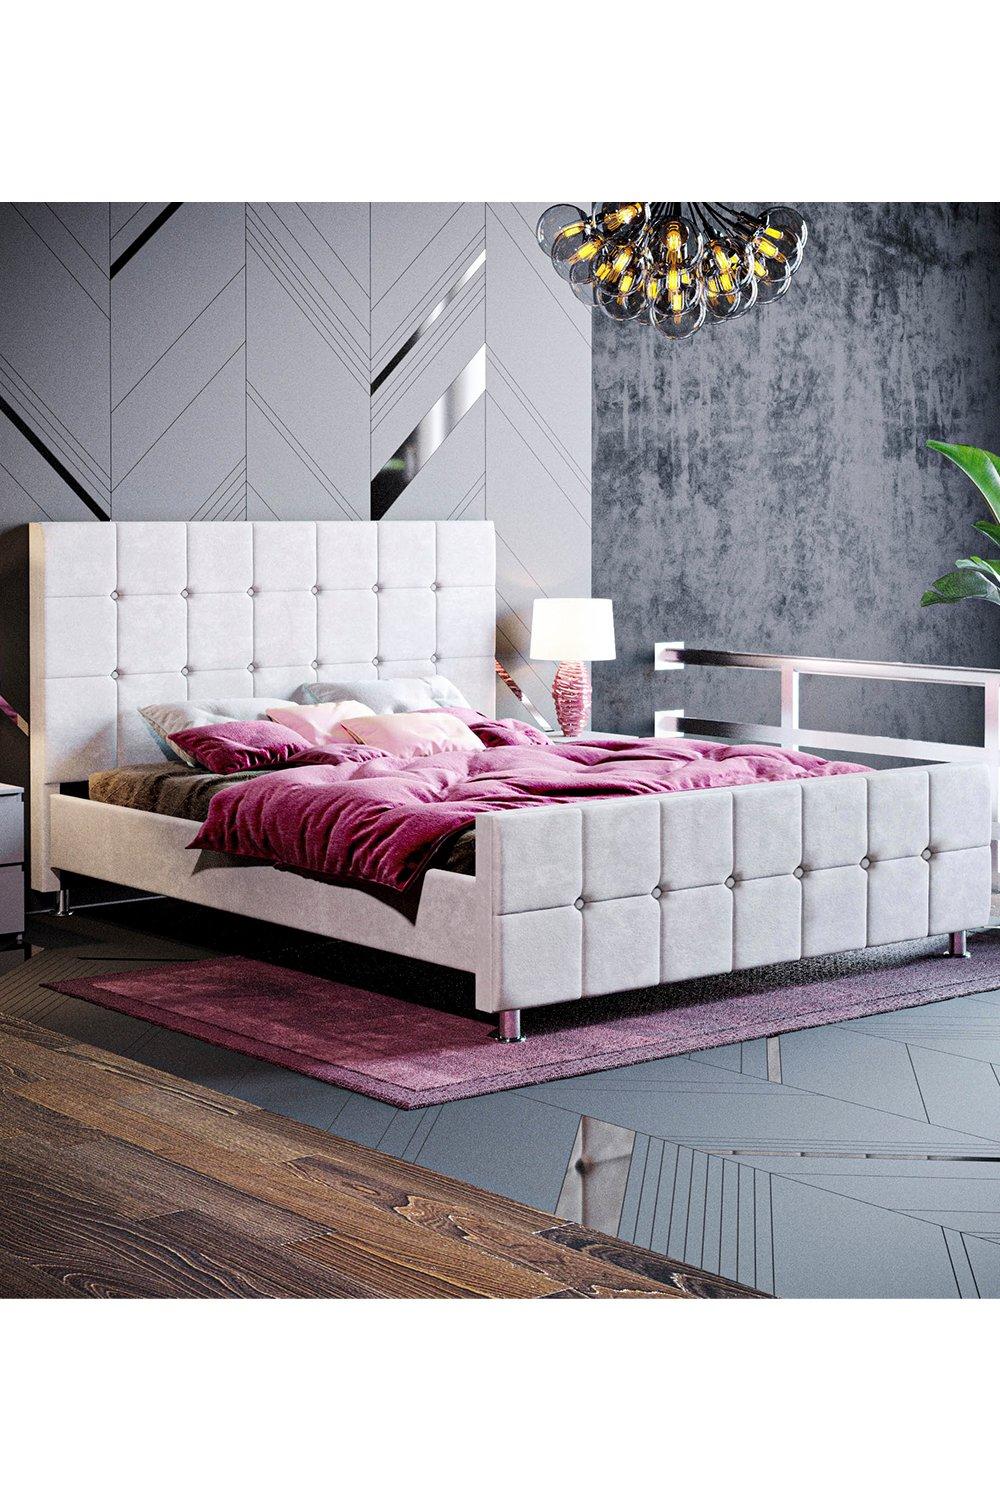 Vida Designs Valentina King Size Bed Frame Velvet Fabric 1180 x 1570 x 2160 mm